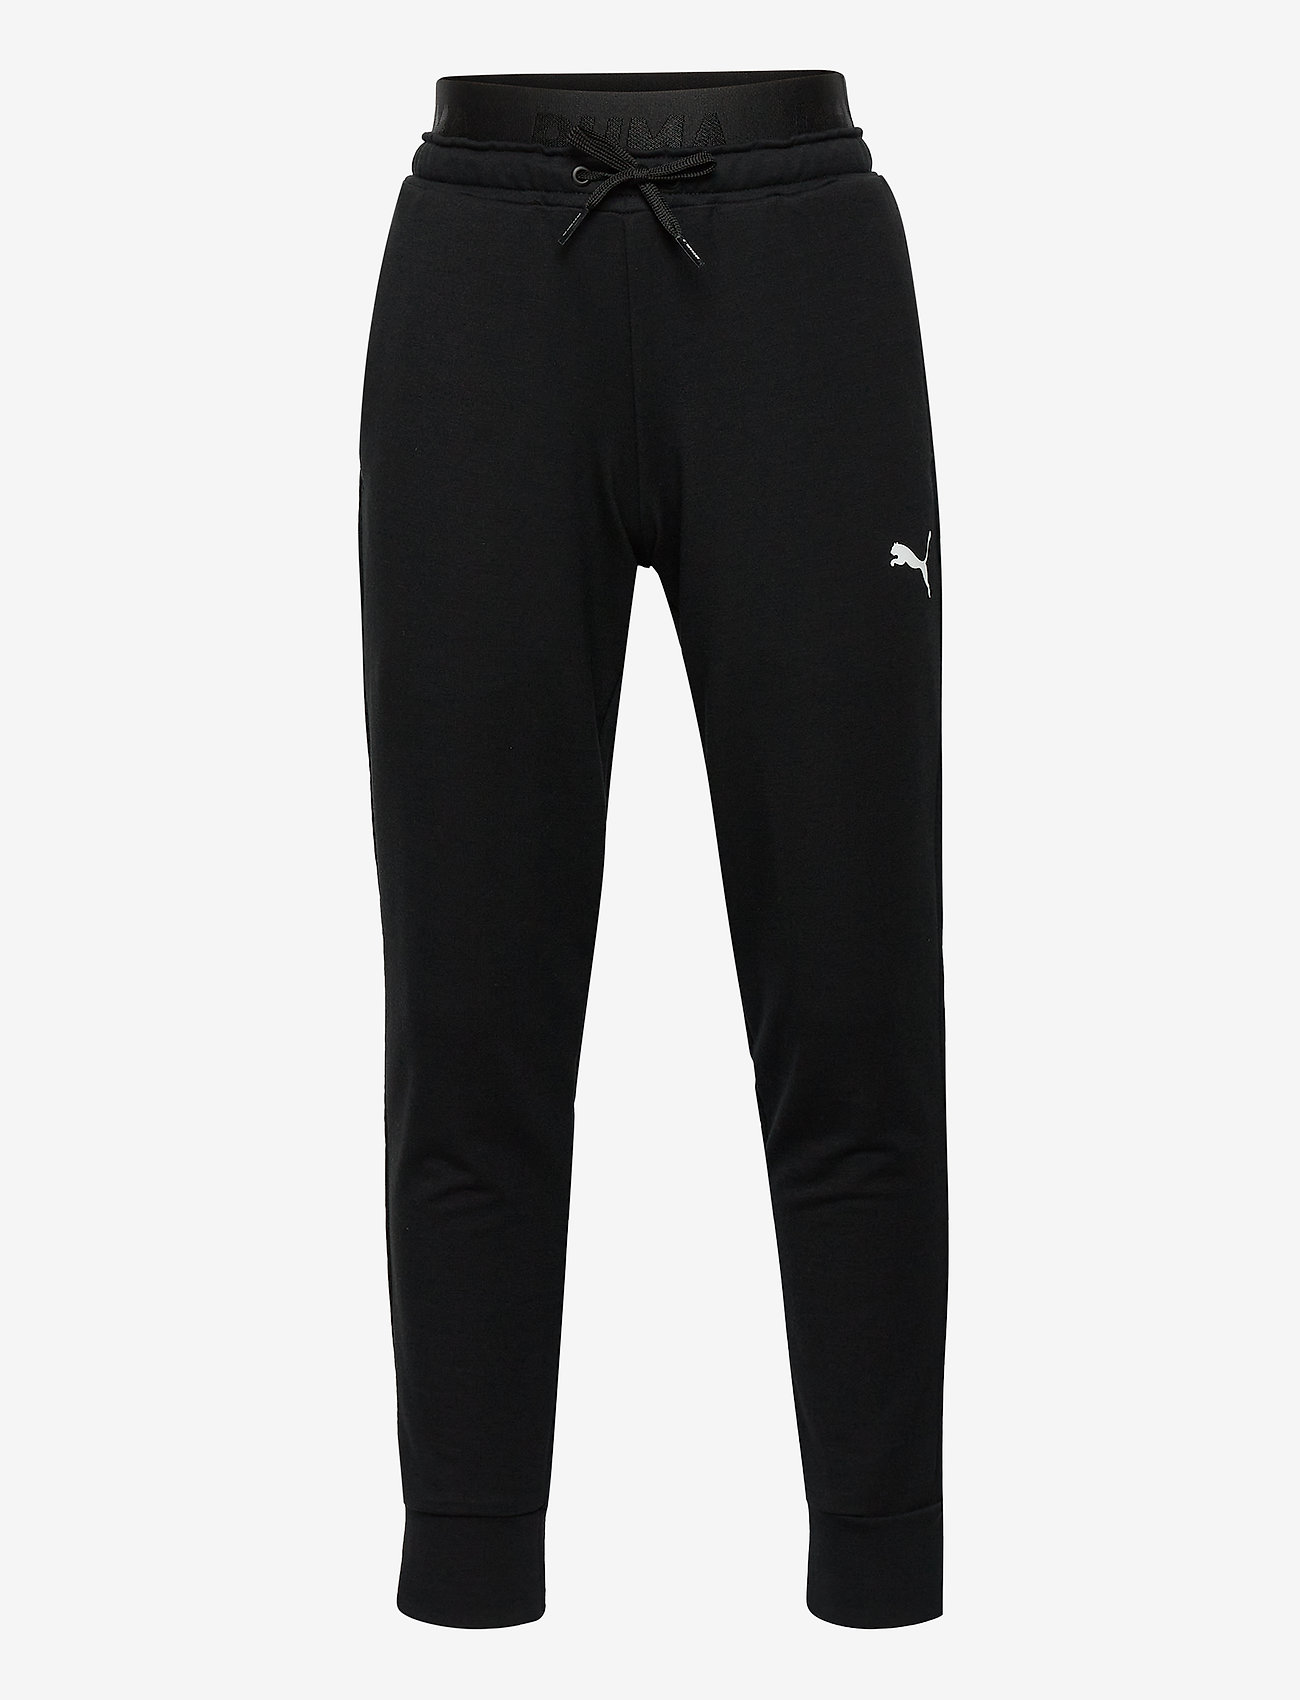 Modern Sports Pants G (Puma Black) (28 